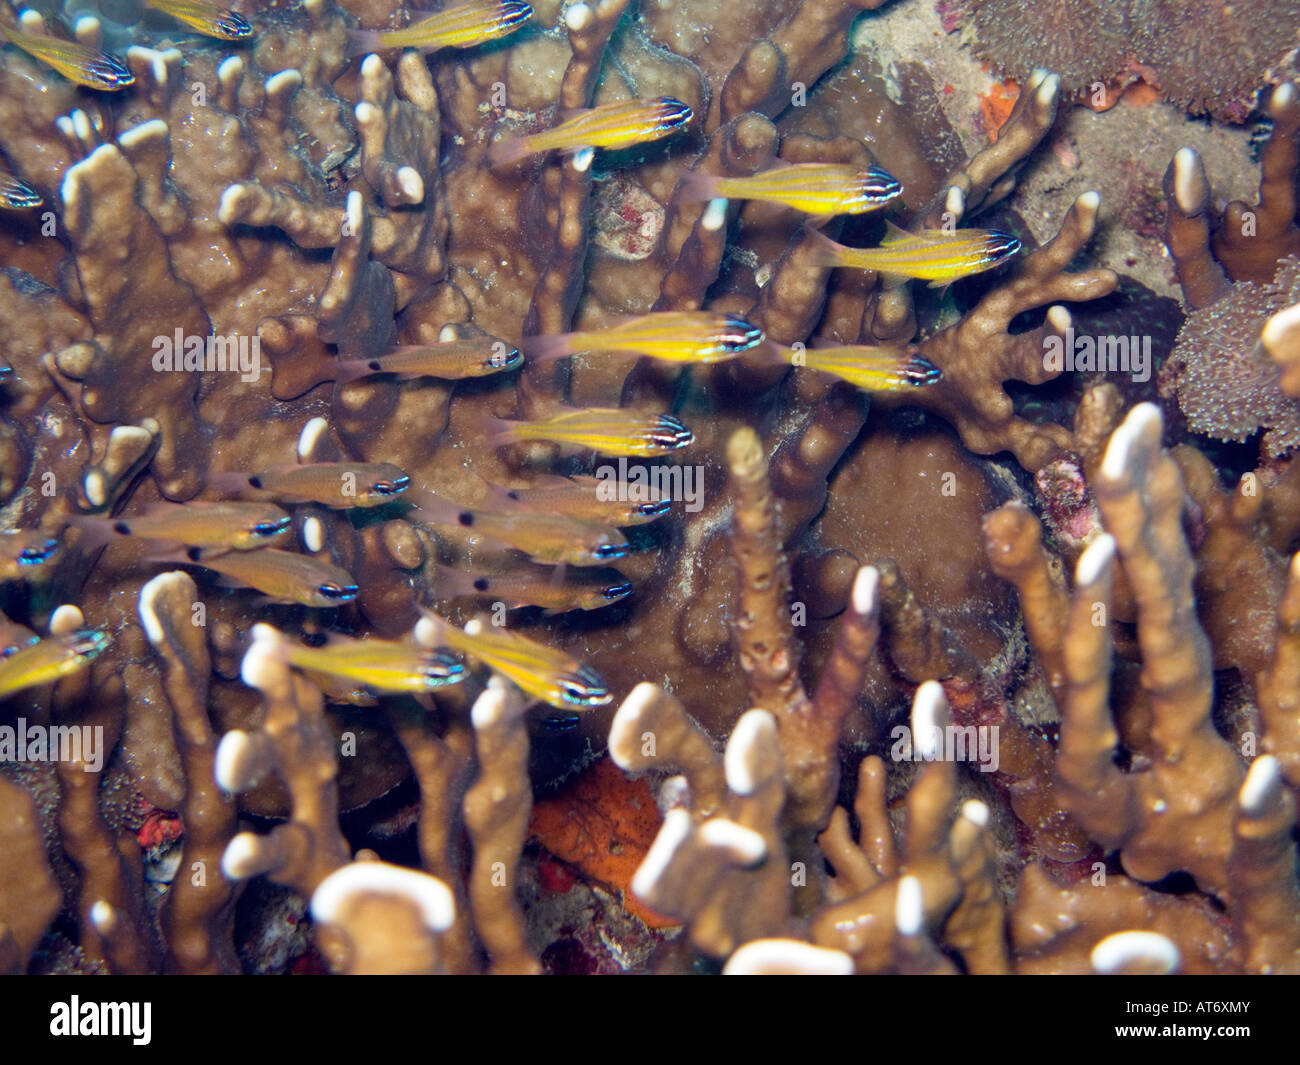 Black and yellow striped cardinal fish February 3 2008, Surin islands, Andaman sea, Thailand Stock Photo